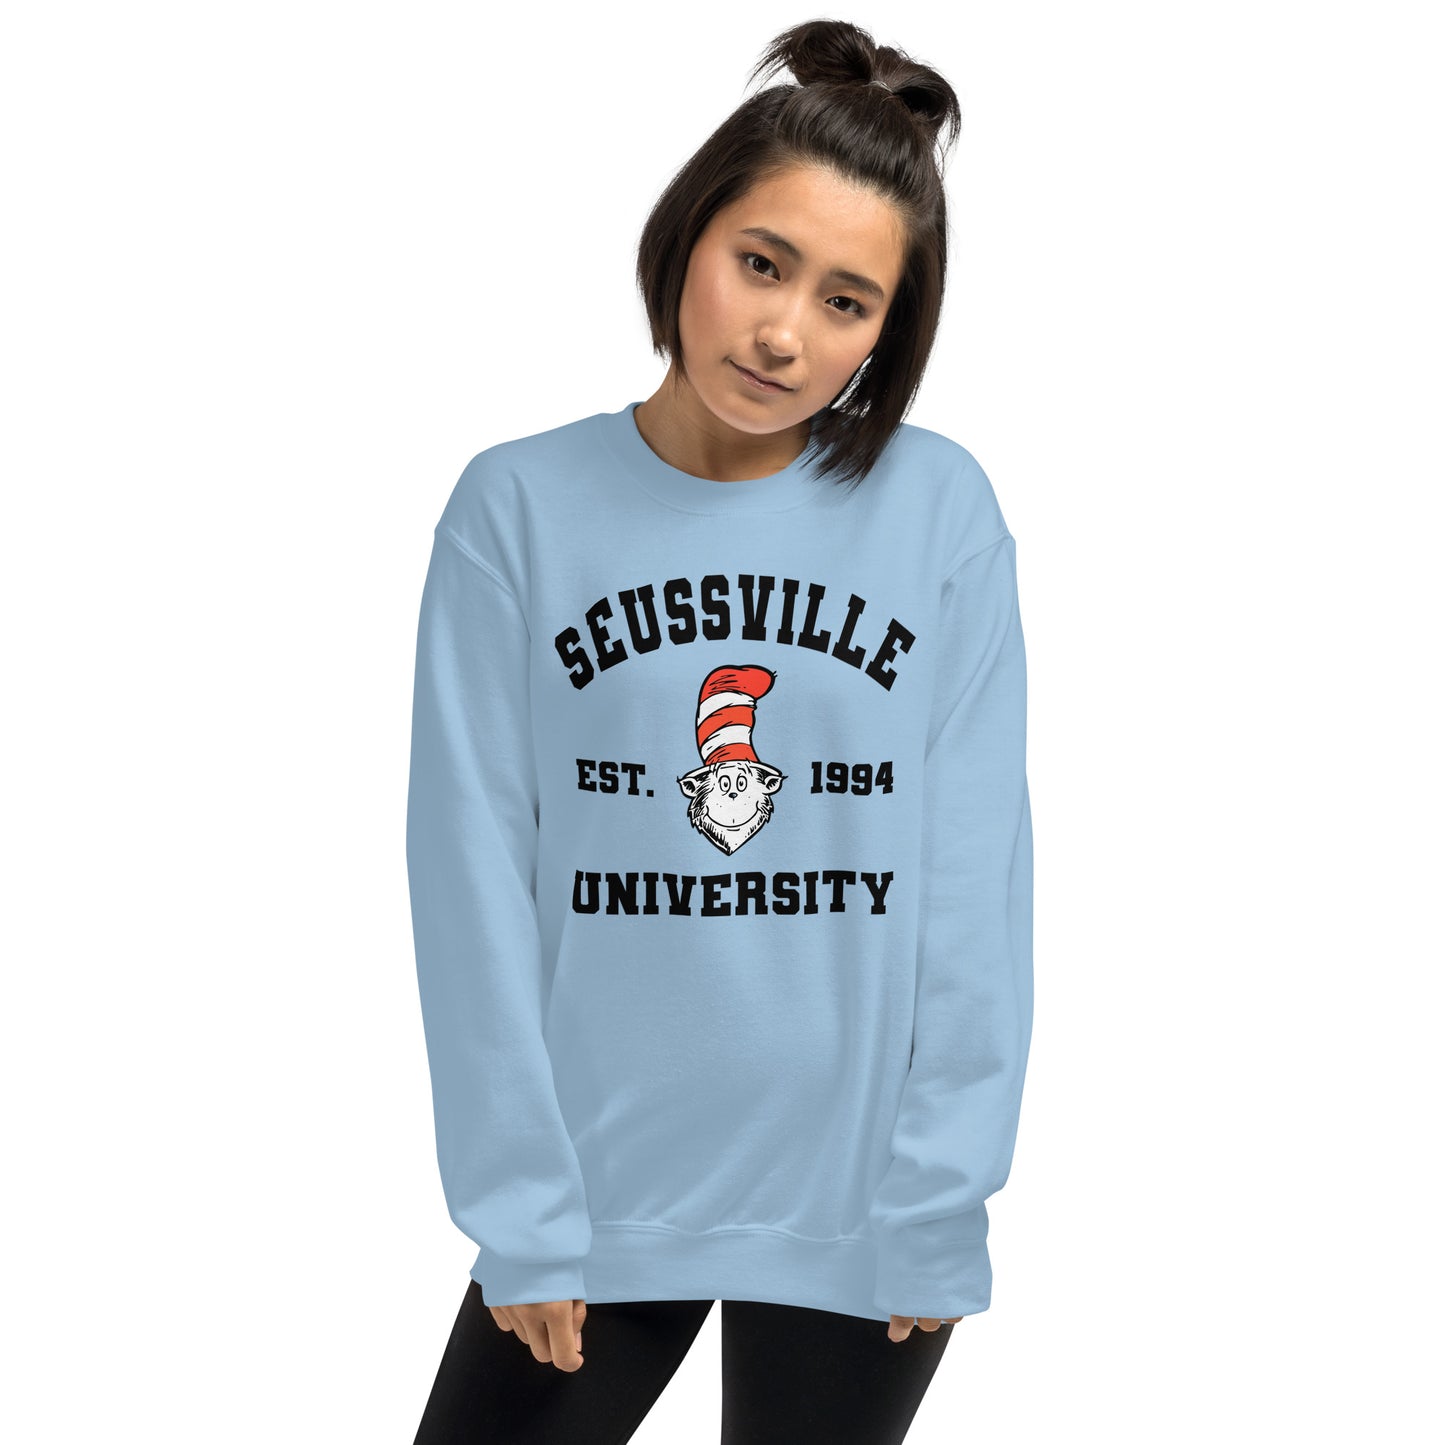 Seussville Sweatshirt